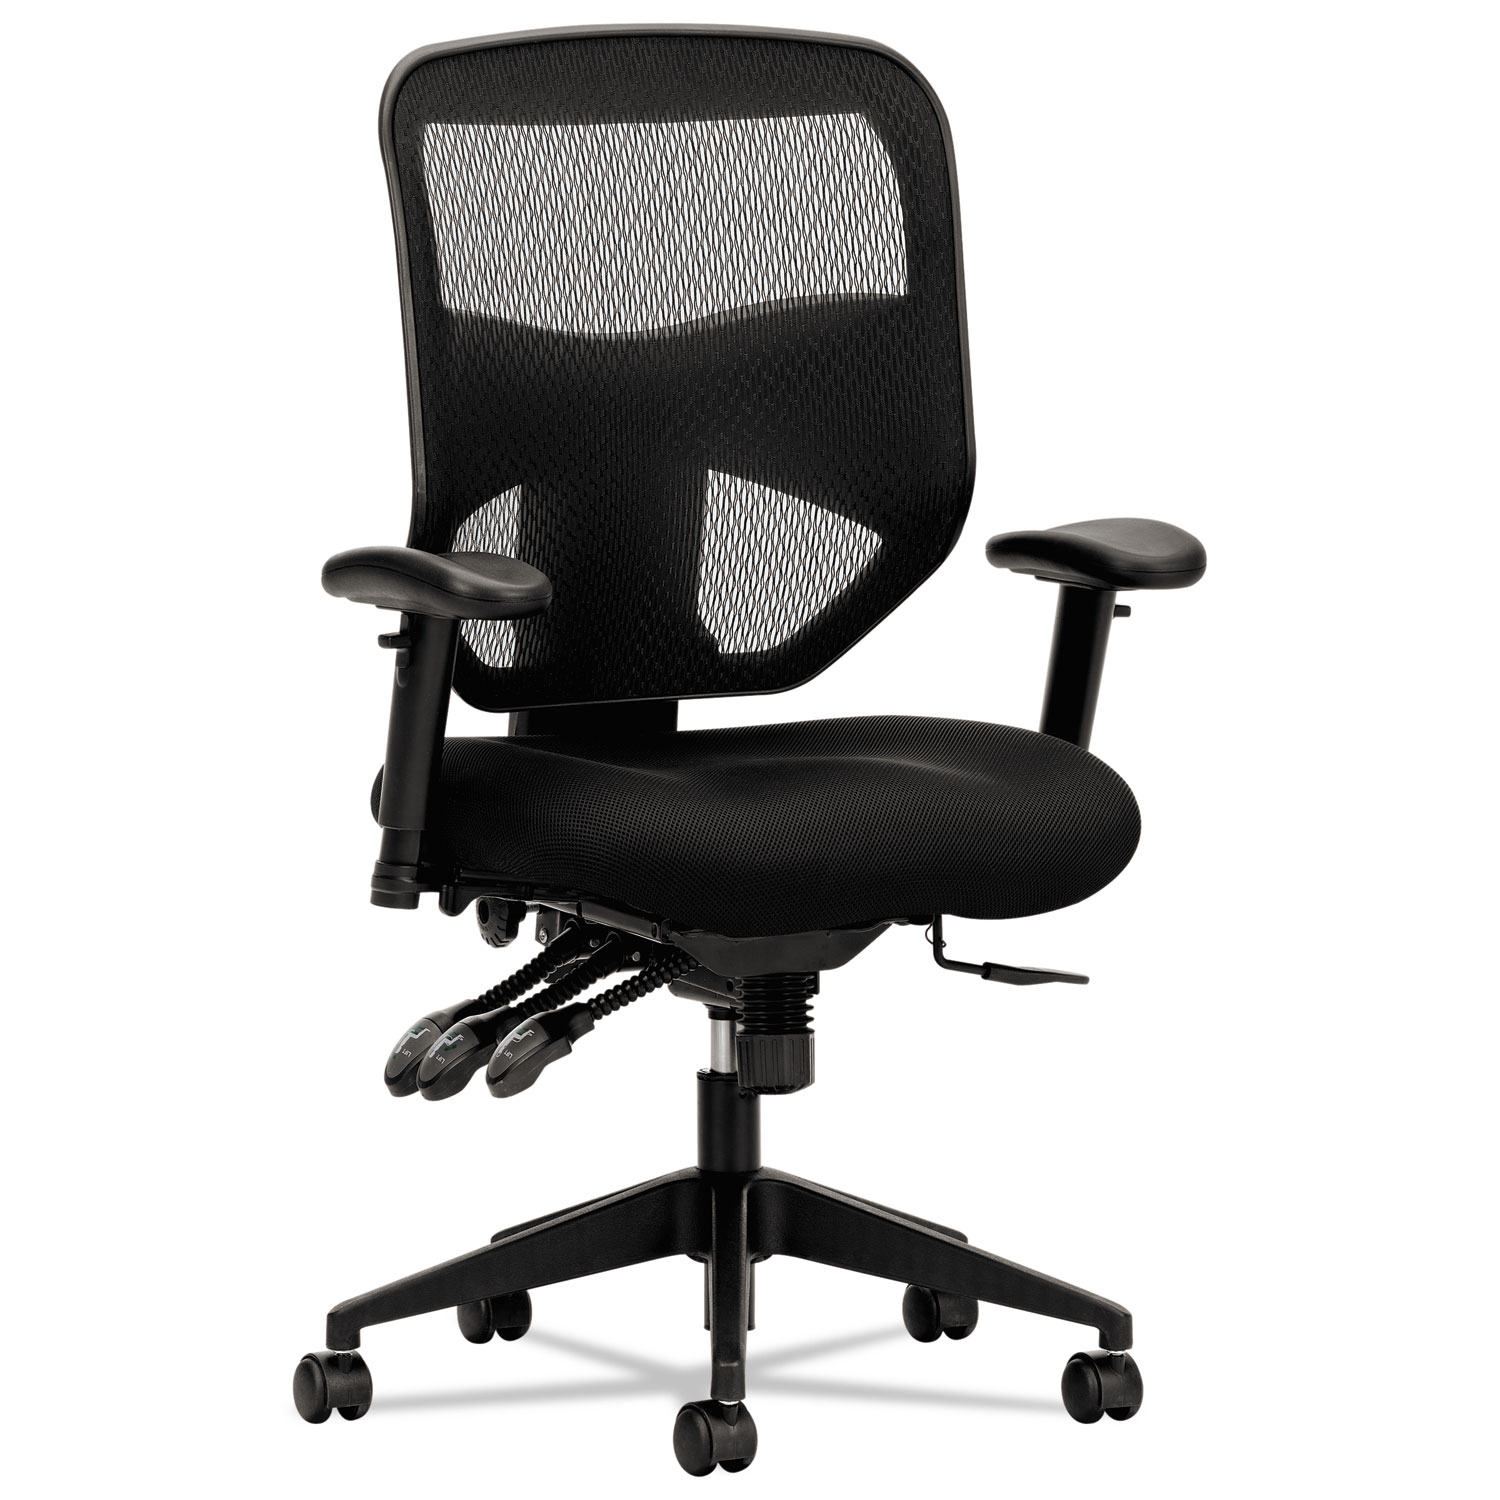  HON HVL532.MM10 VL532 Mesh High-Back Task Chair, Supports up to 250 lbs., Black Seat/Black Back, Black Base (BSXVL532MM10) 